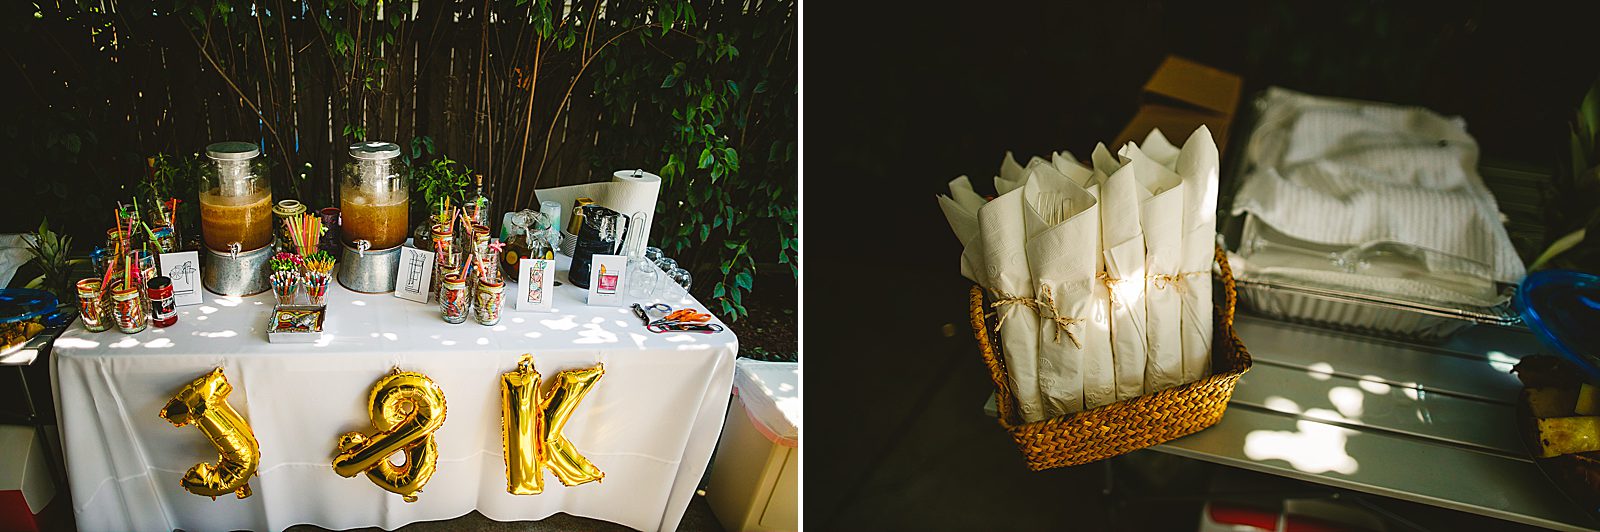 14 backyard wedding details - Amazing Wedding in Backyard // Kristen + Jeff